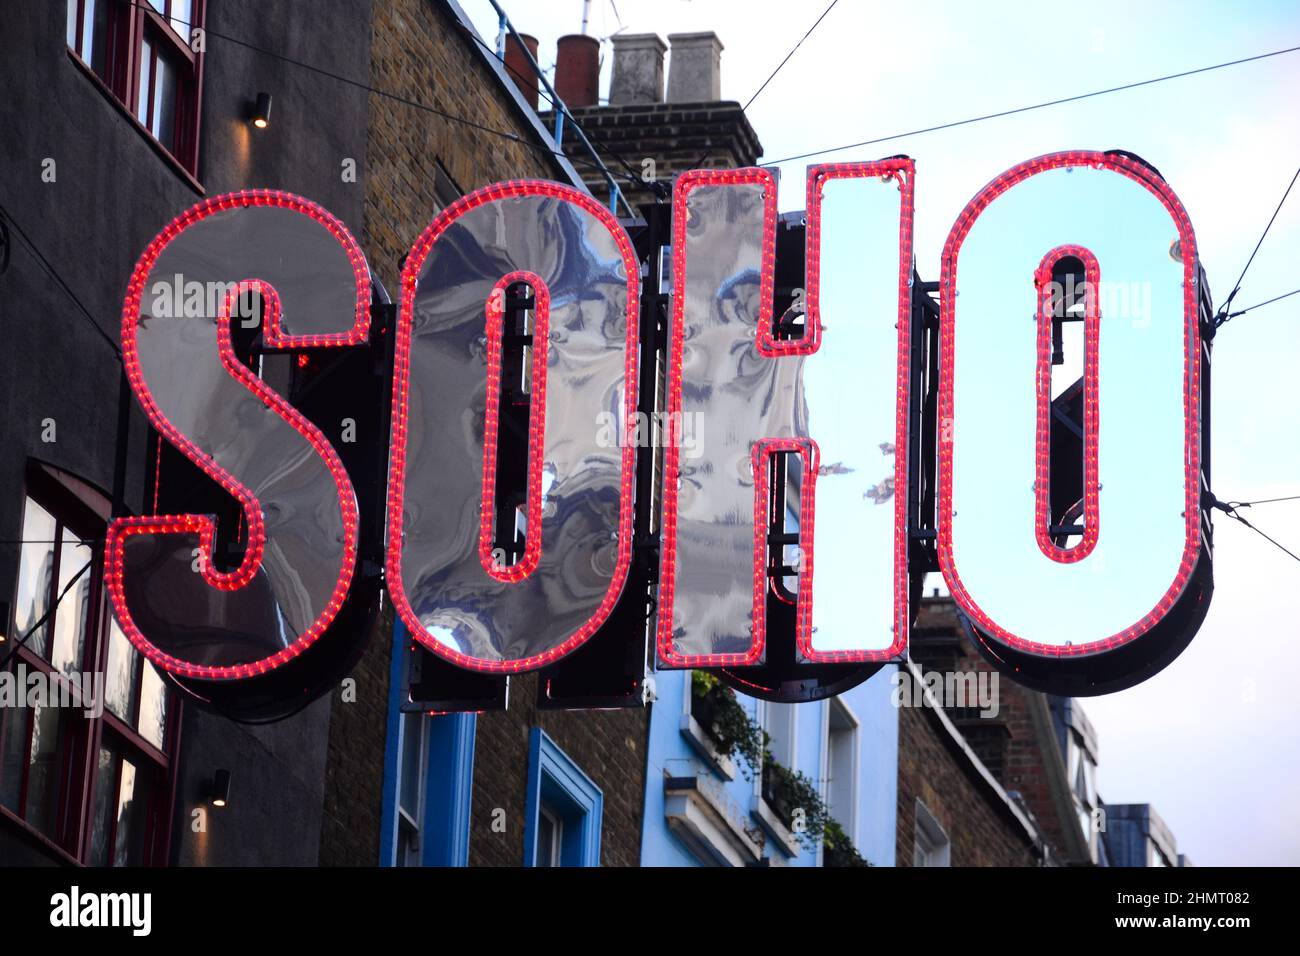 A 'Soho' sign or signage above Beak Street, Soho, London, United Kingdom, British Isles, welcome people to the area. Stock Photo